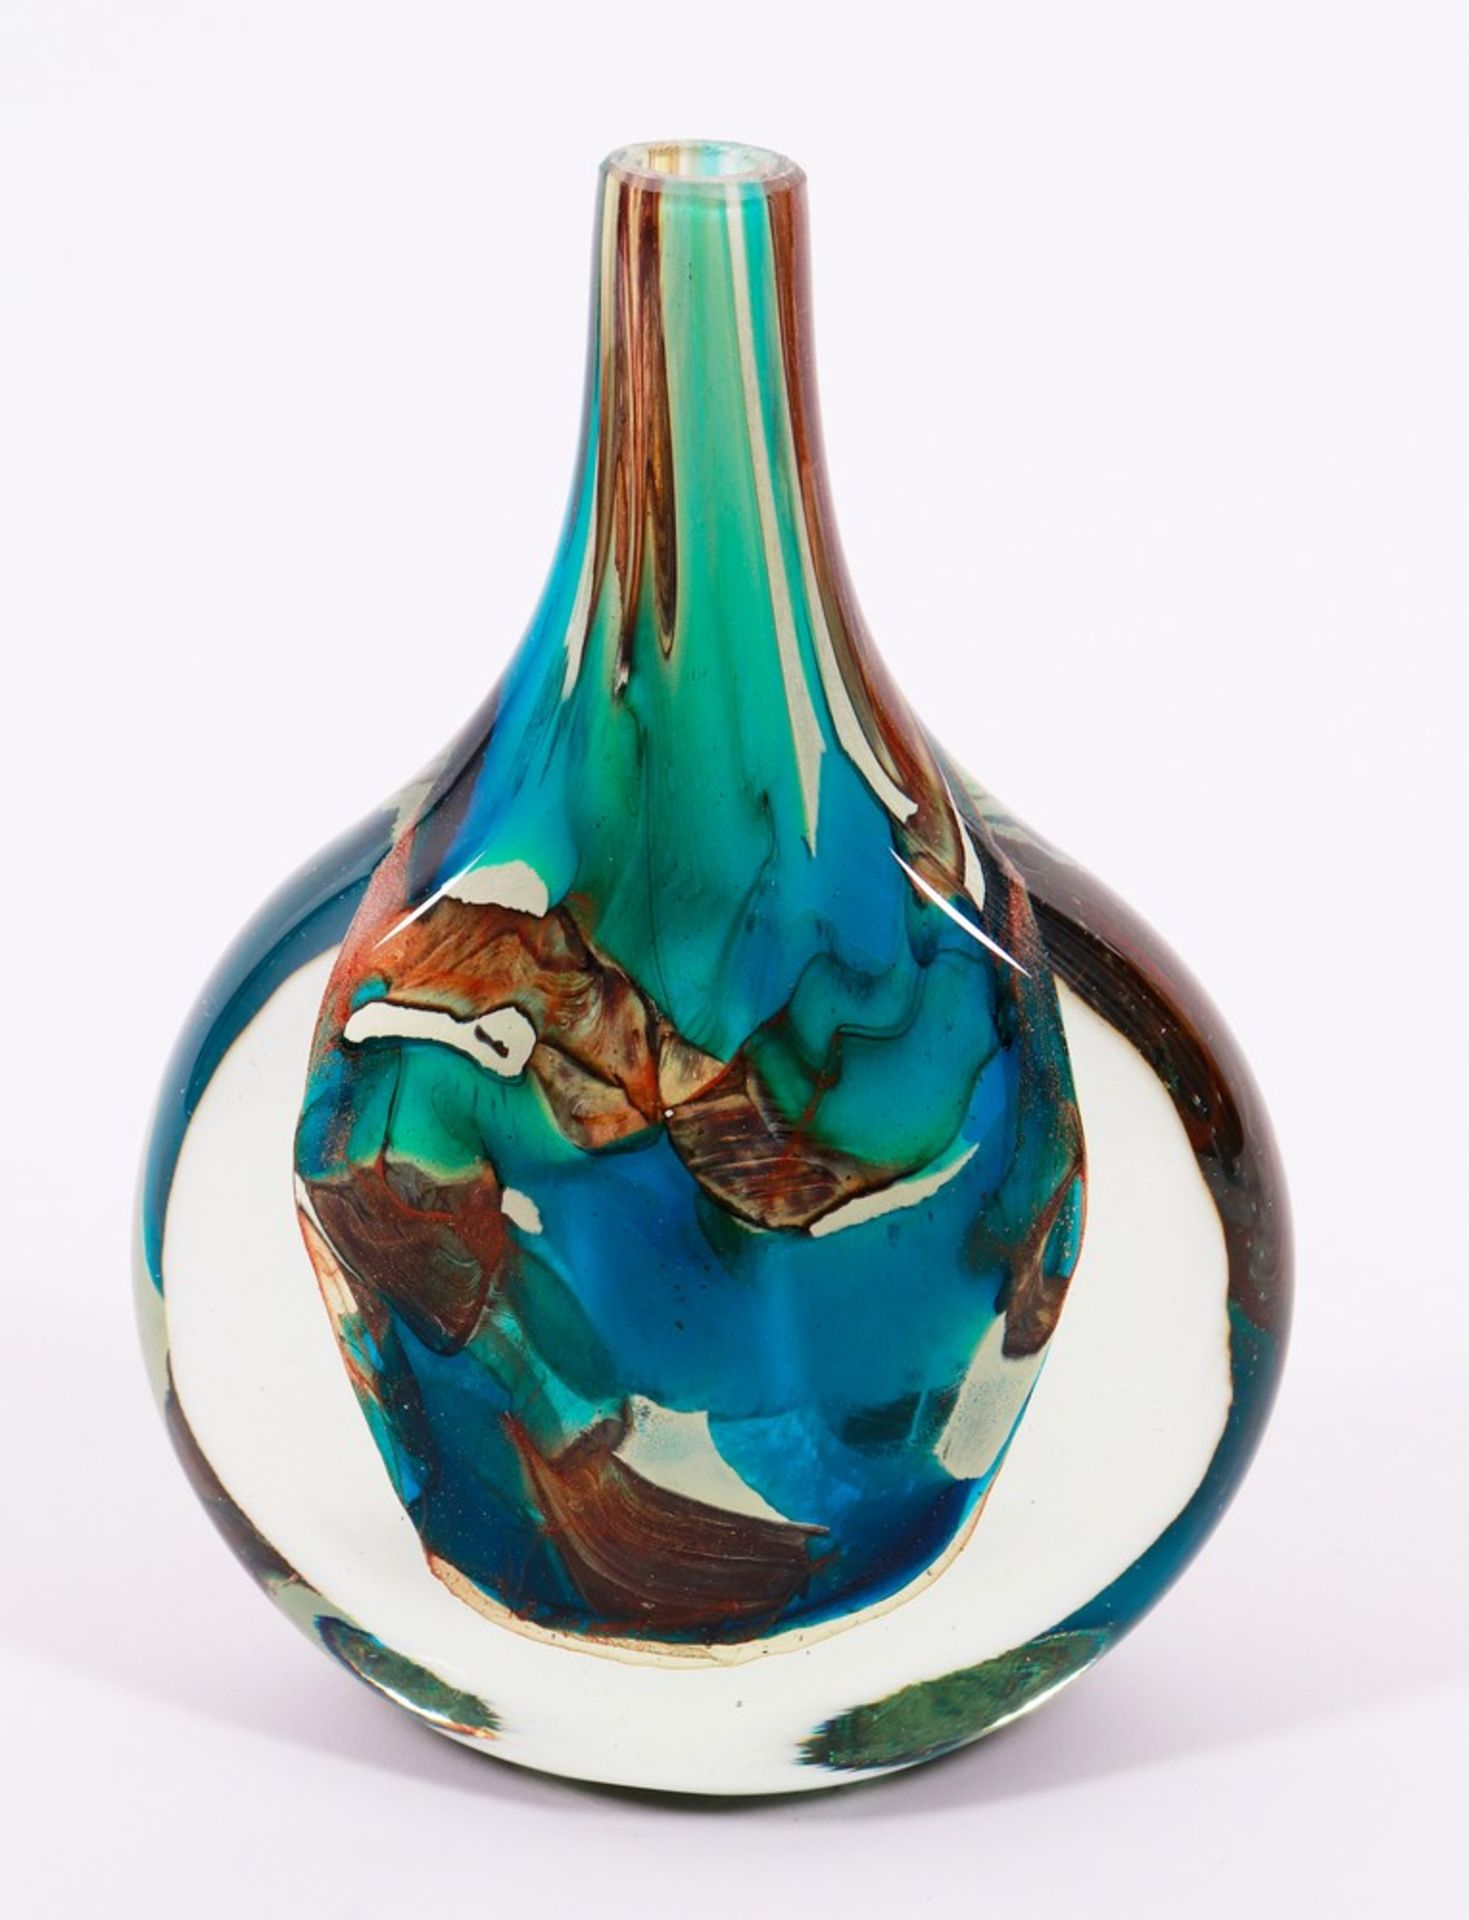 Studio glass vase, design Michael Harris, manufactured by Mdina, Malta, 1980s